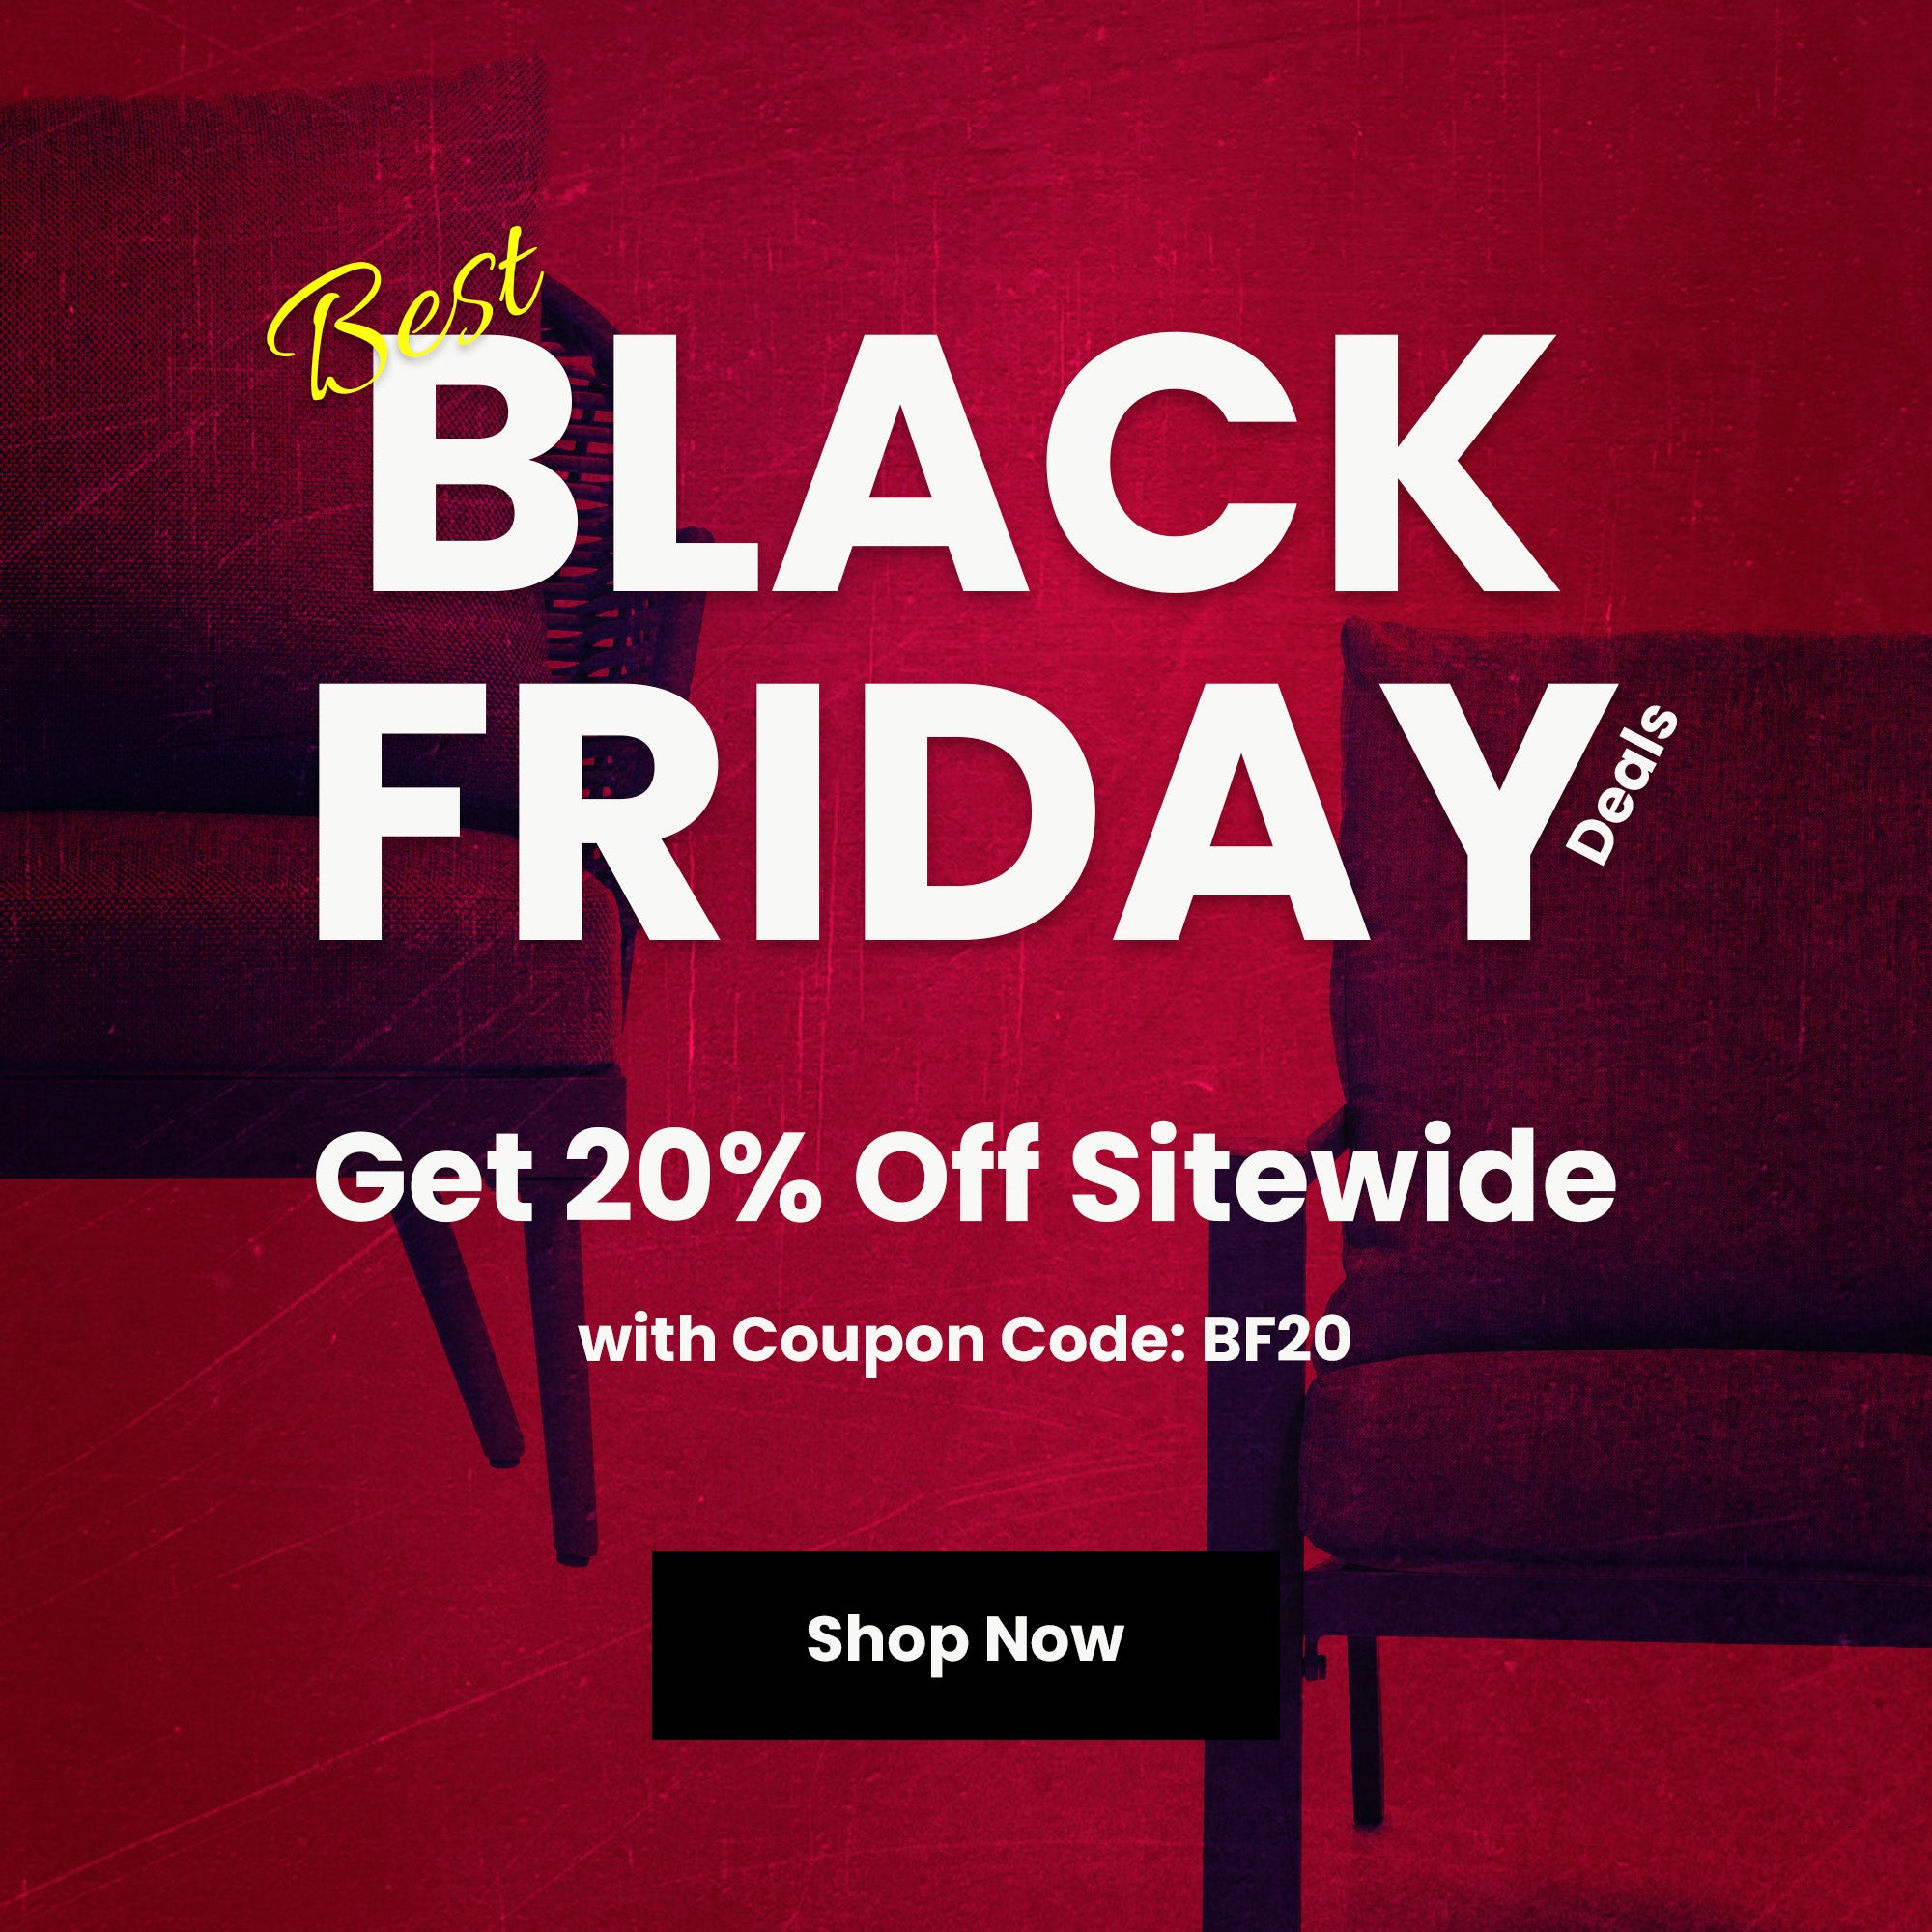 Black Friday Big Sale On Jardina, 20% Off Sitewide